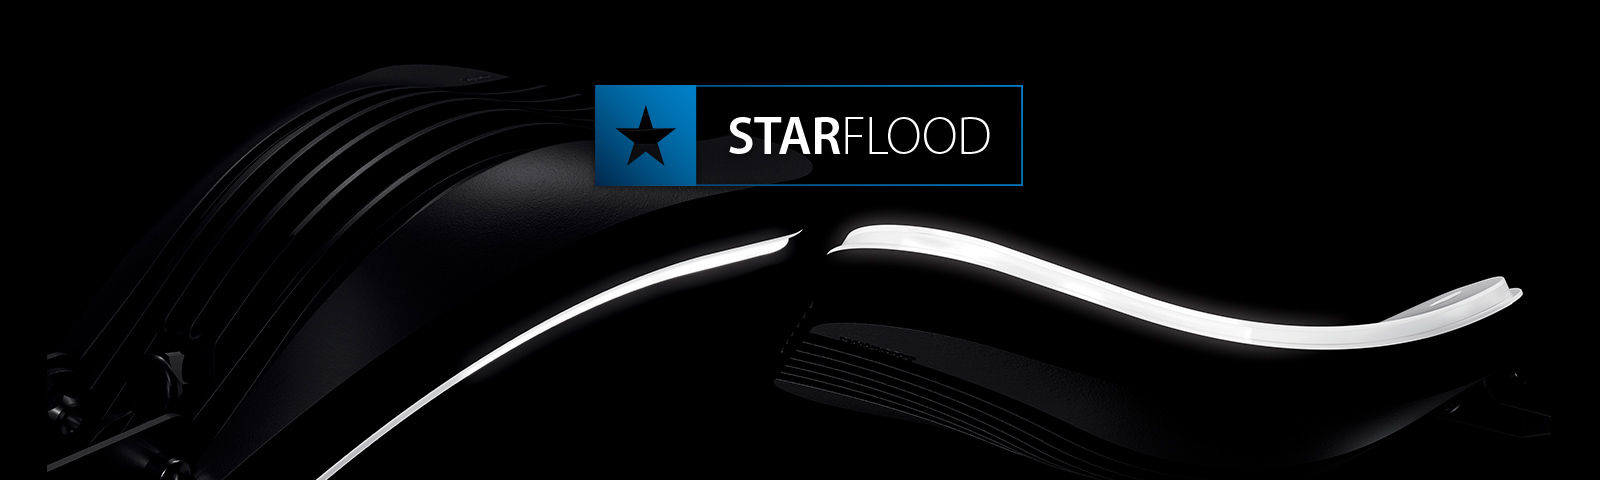 Starflood - Form meets function